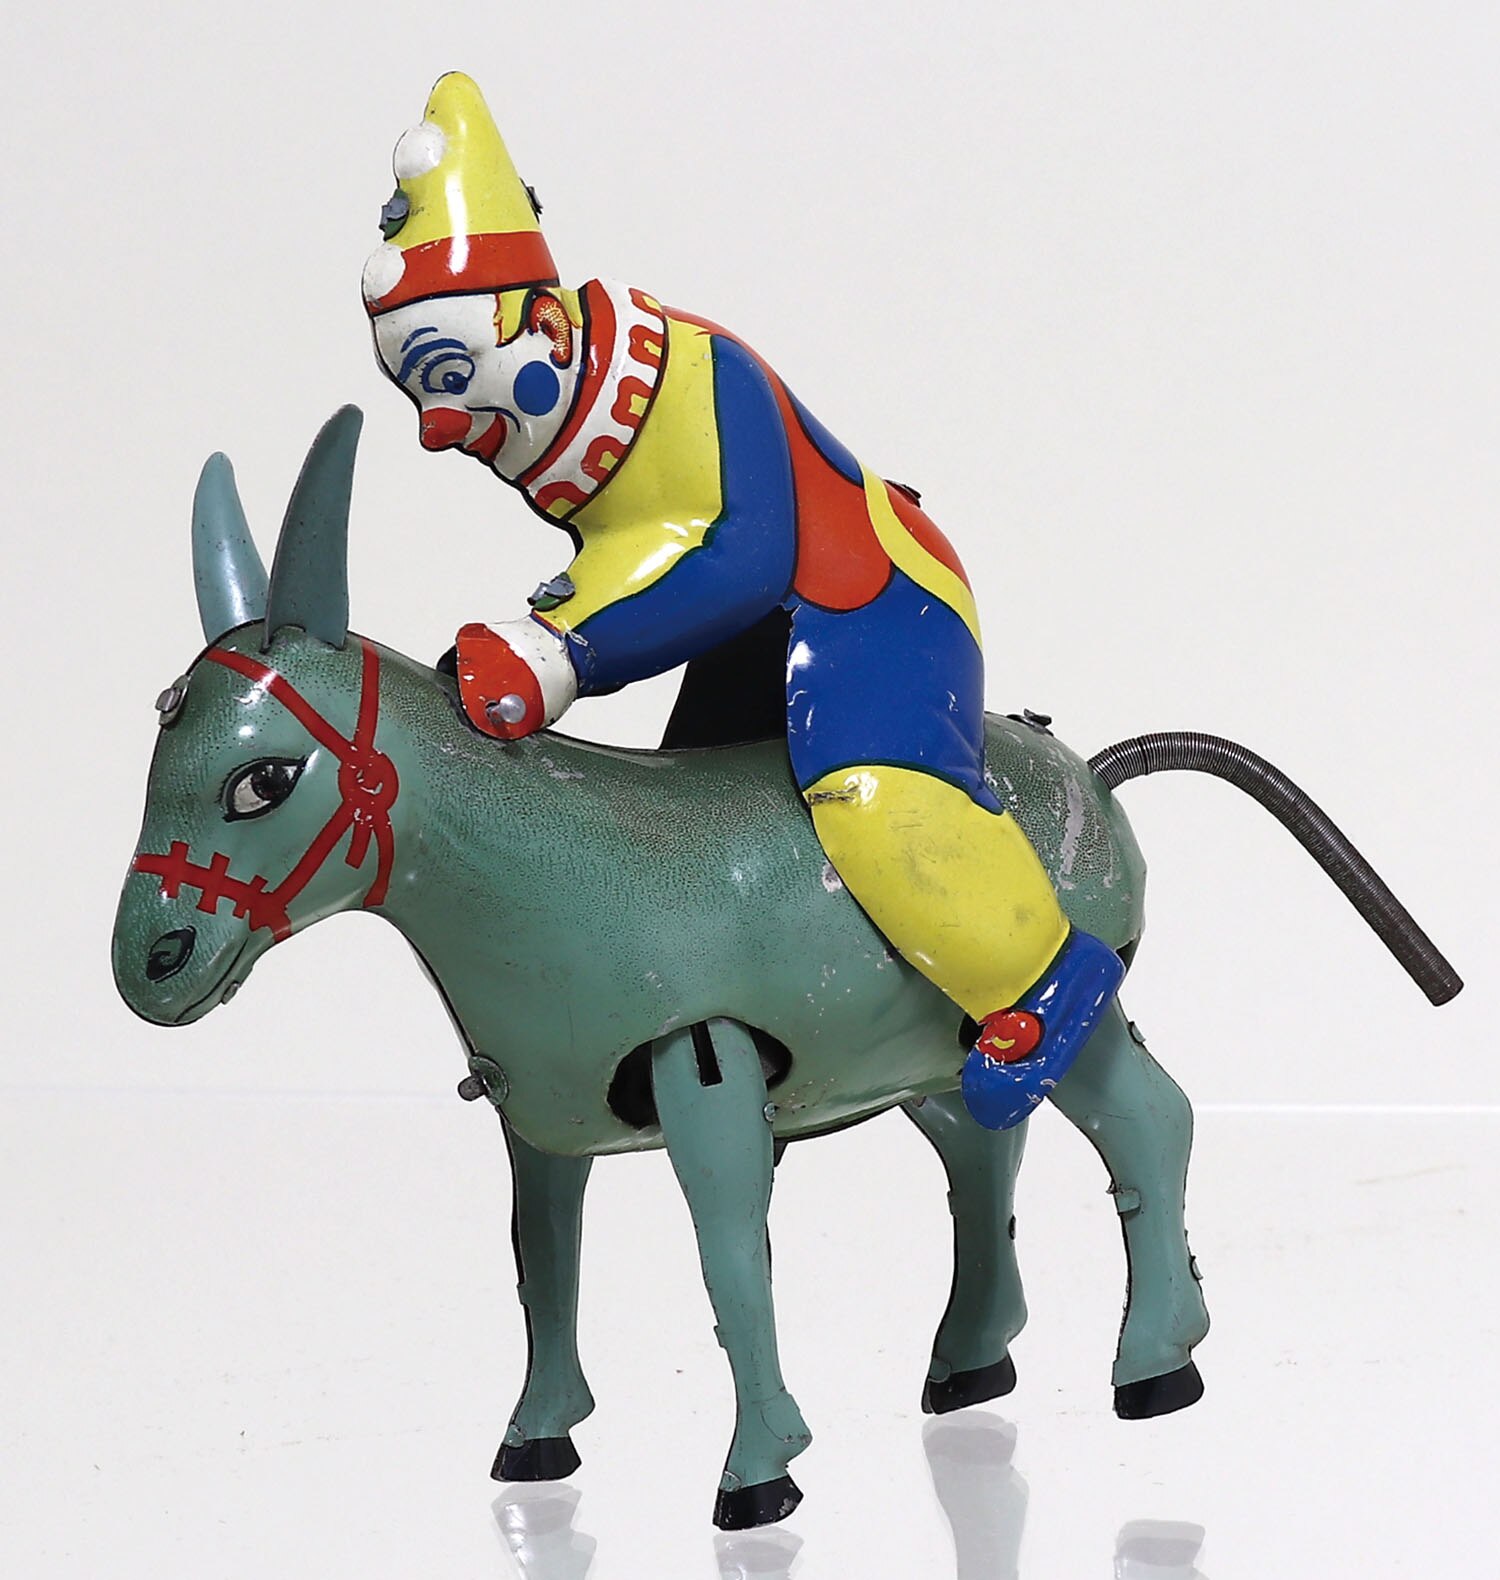 Clown riding a donkey